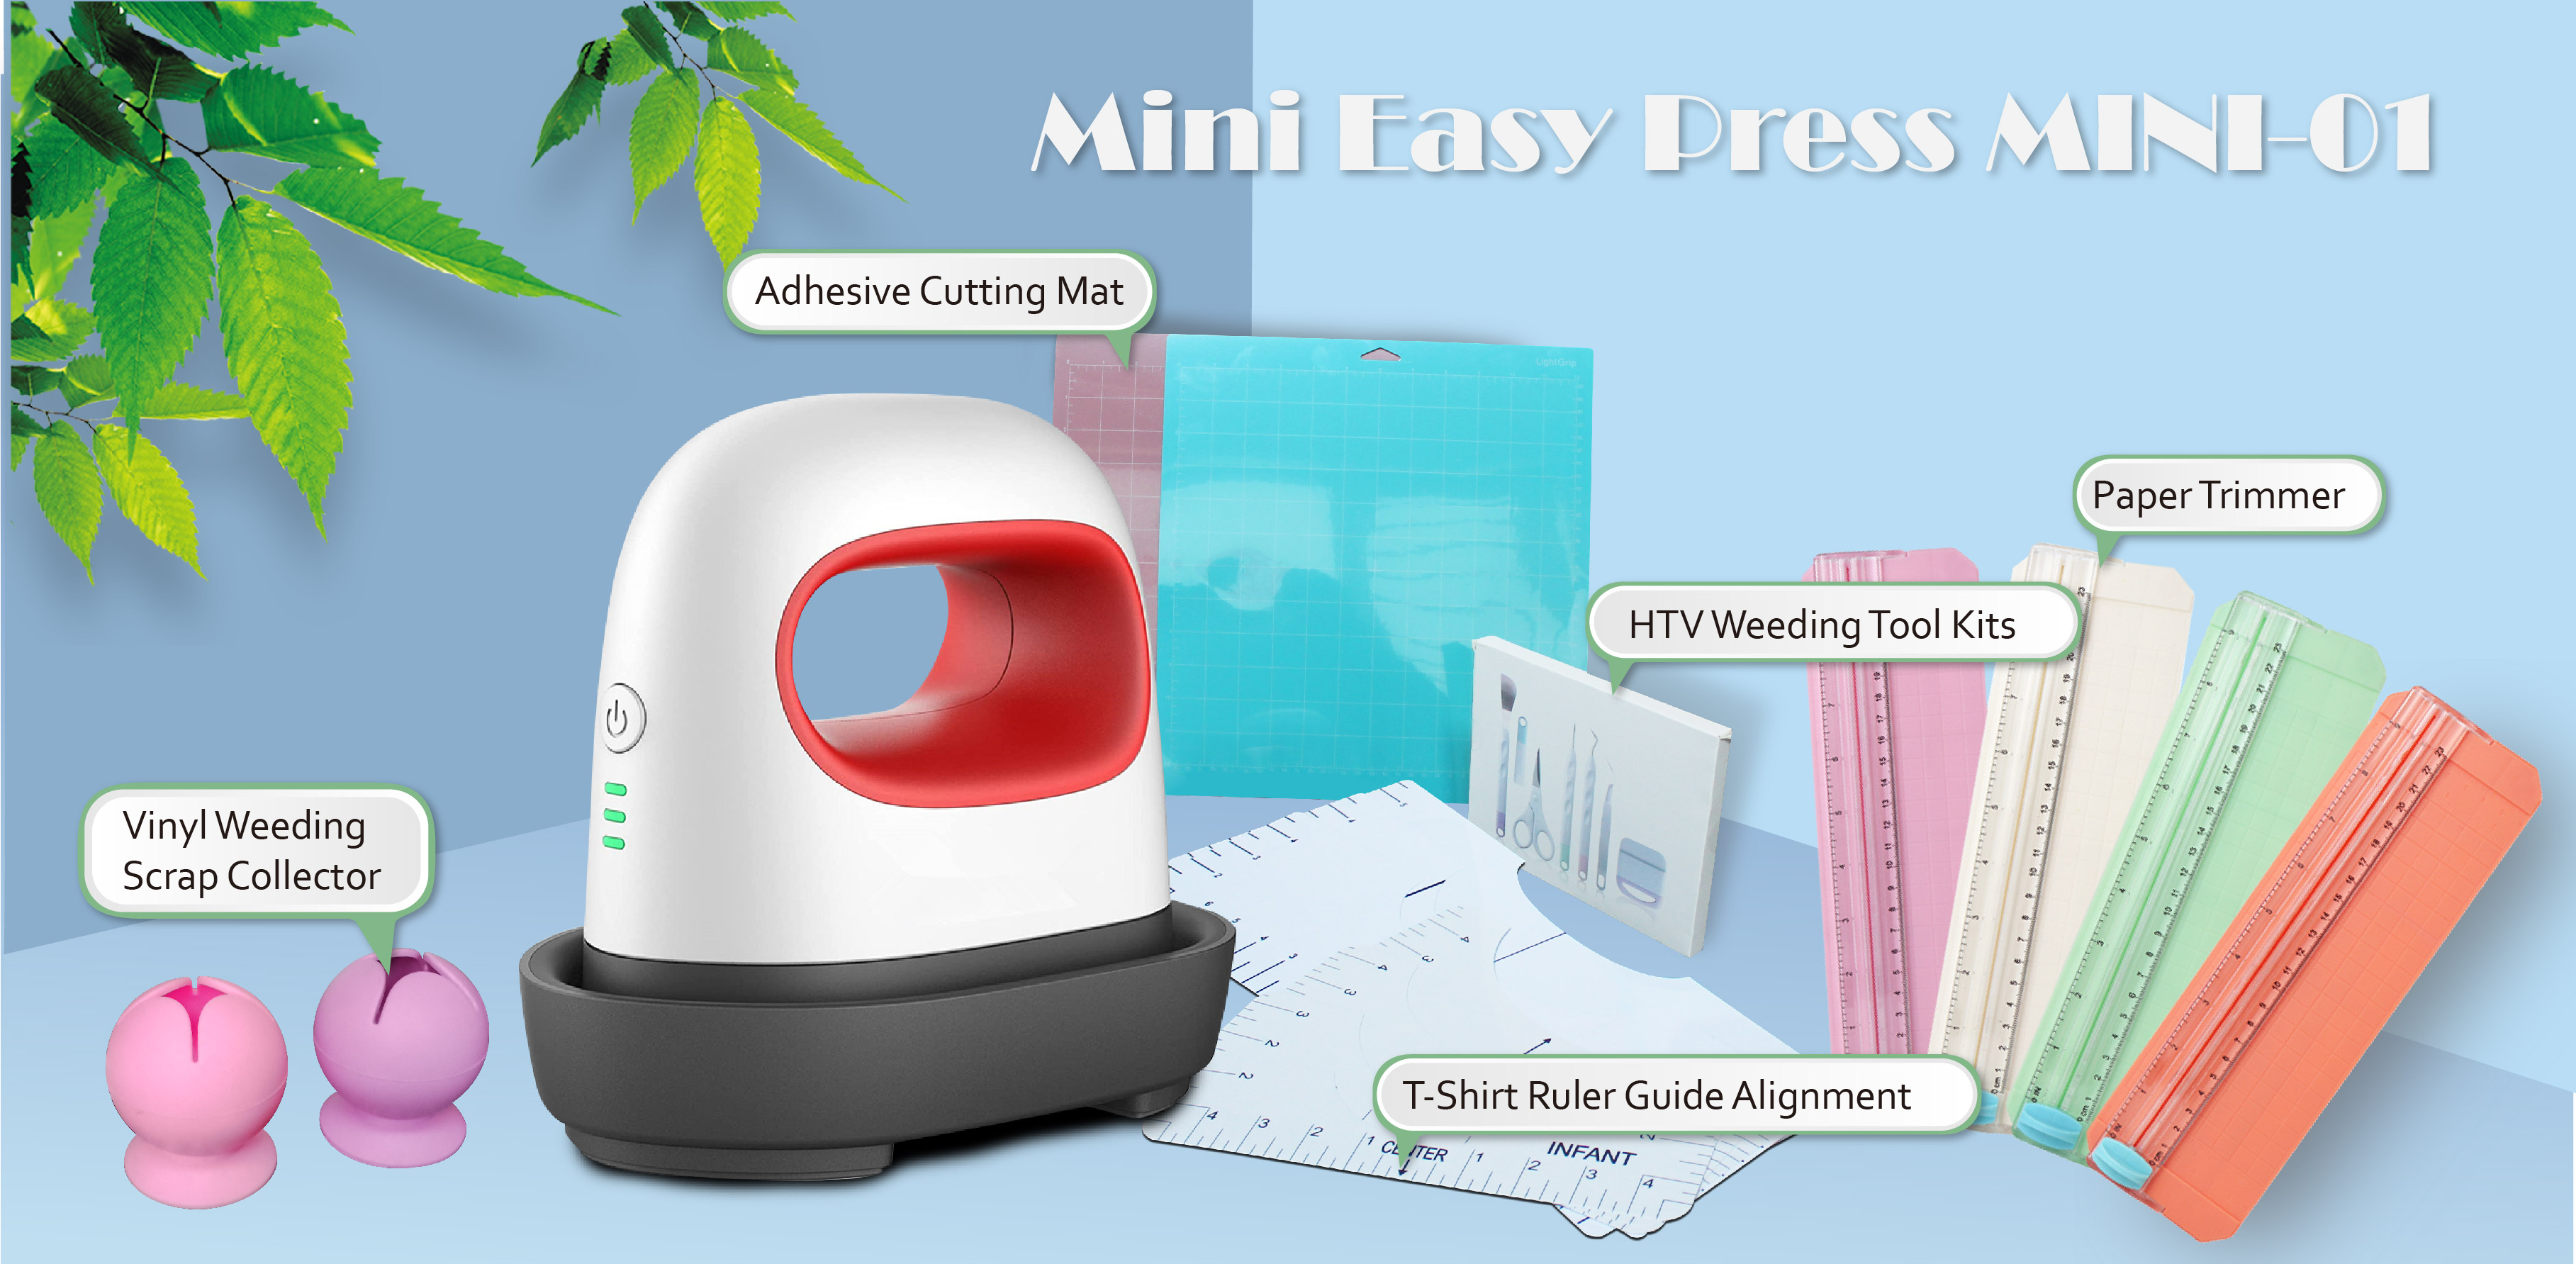 Mini Heat Press Machine for HTV Vinyl Projects Small Iron On Heat Transfer  DIY